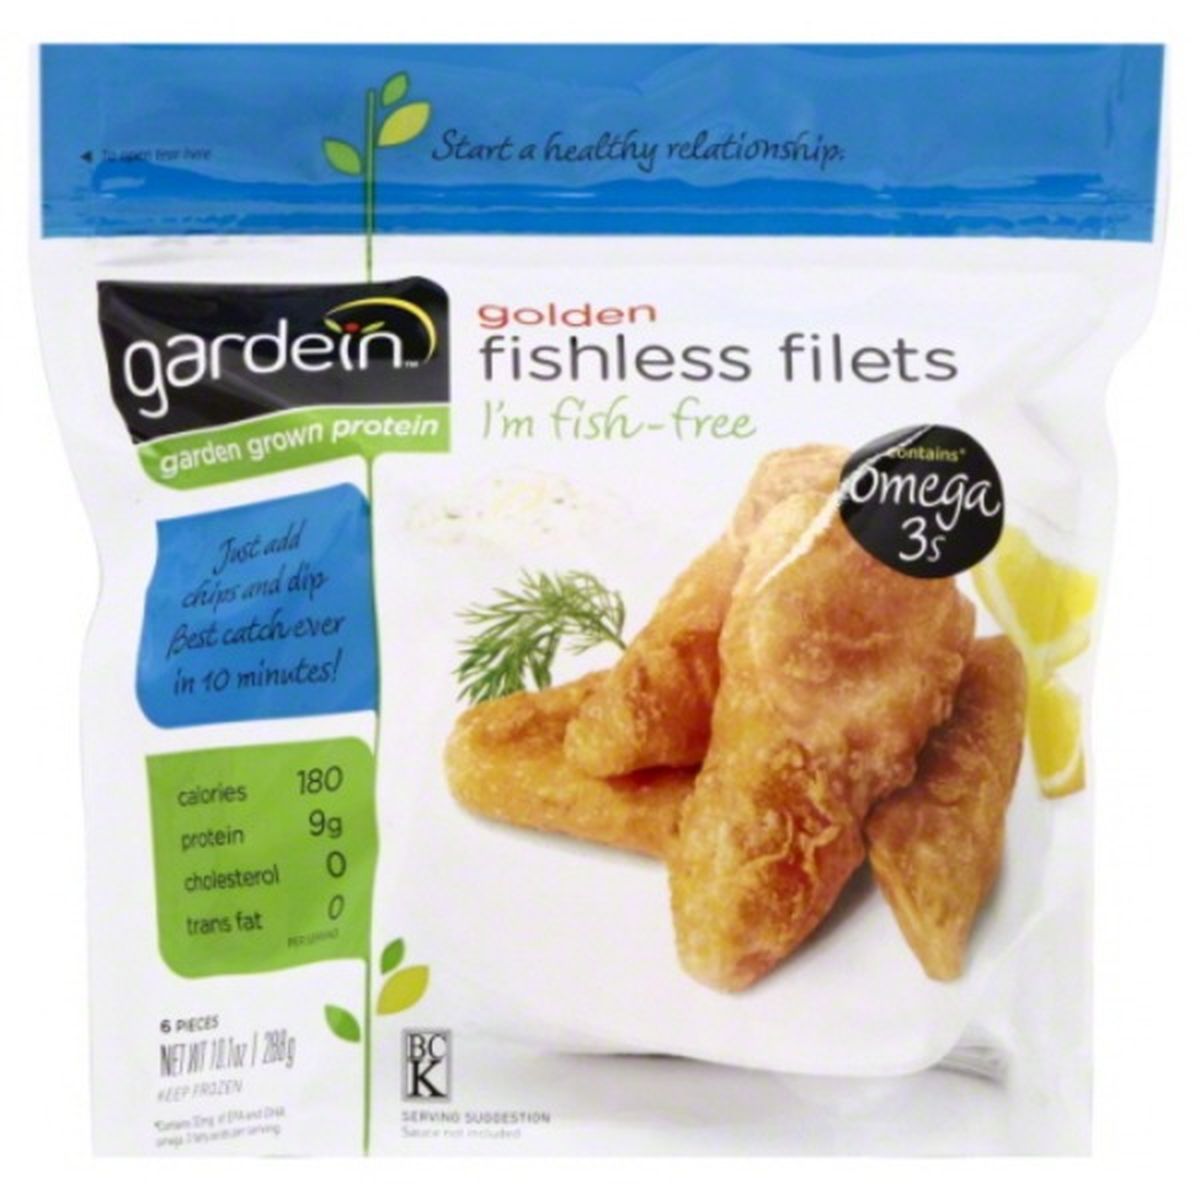 Calories in gardein Fishless Filets, Golden